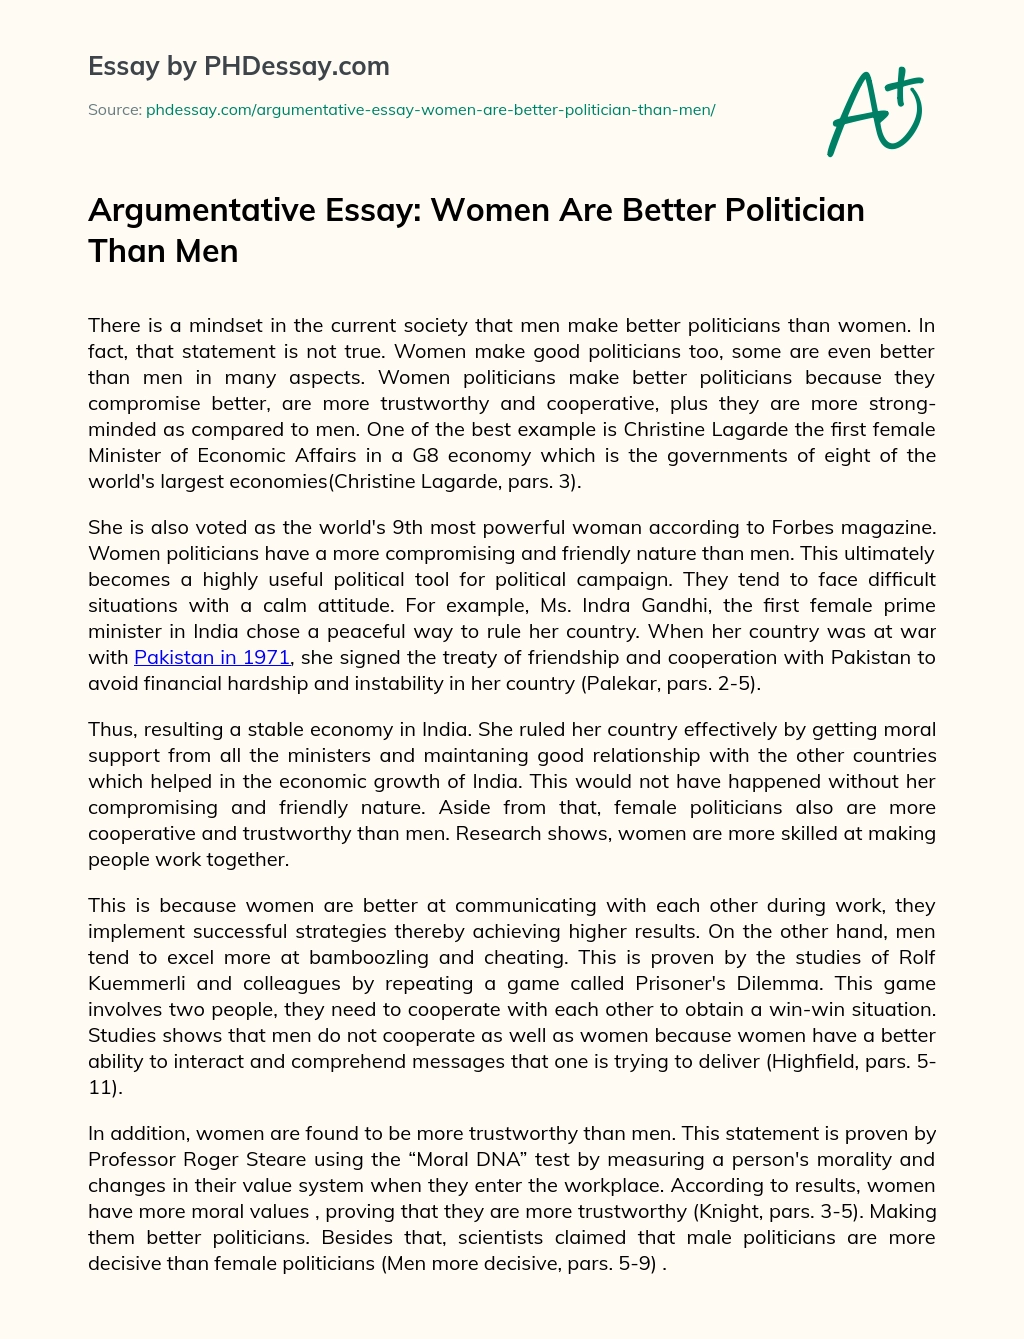 Argumentative Essay: Women Are Better Politician Than Men